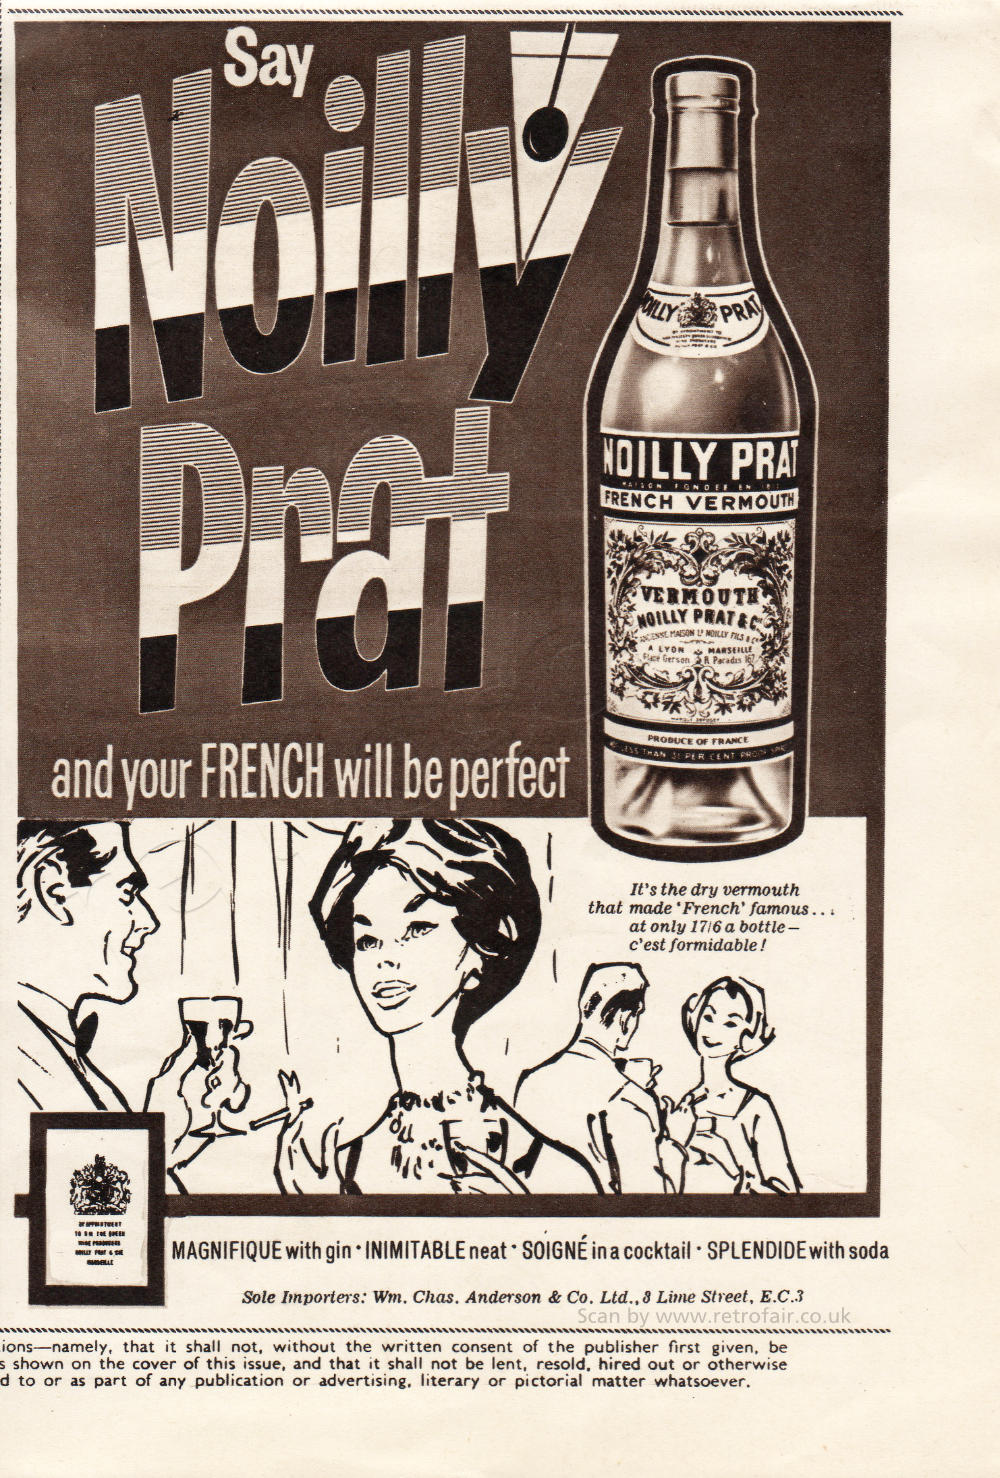 1961 Noilly Prat Vermouth - unframed vintage ad